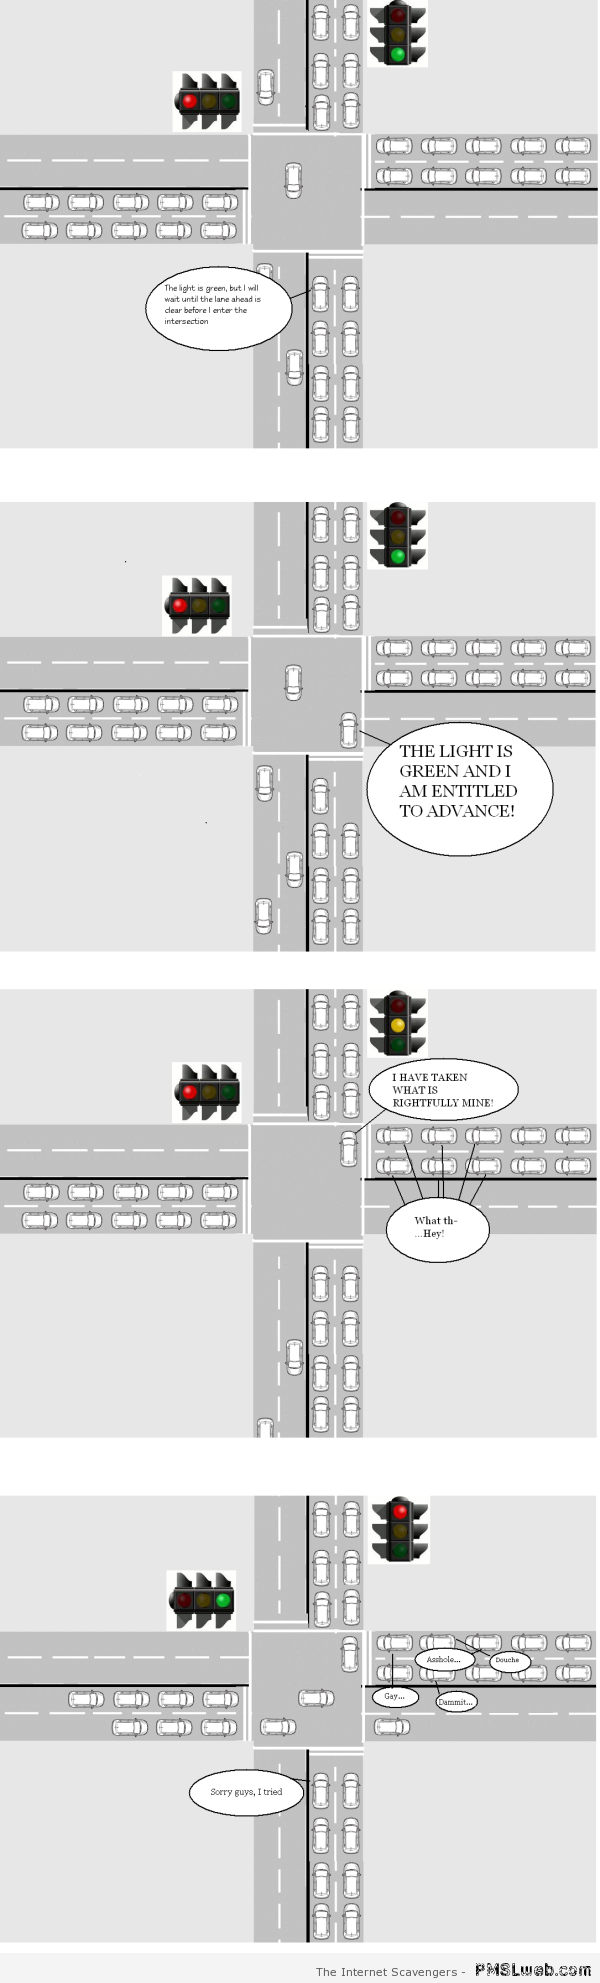 Funny traffic truths at PMSLweb.com